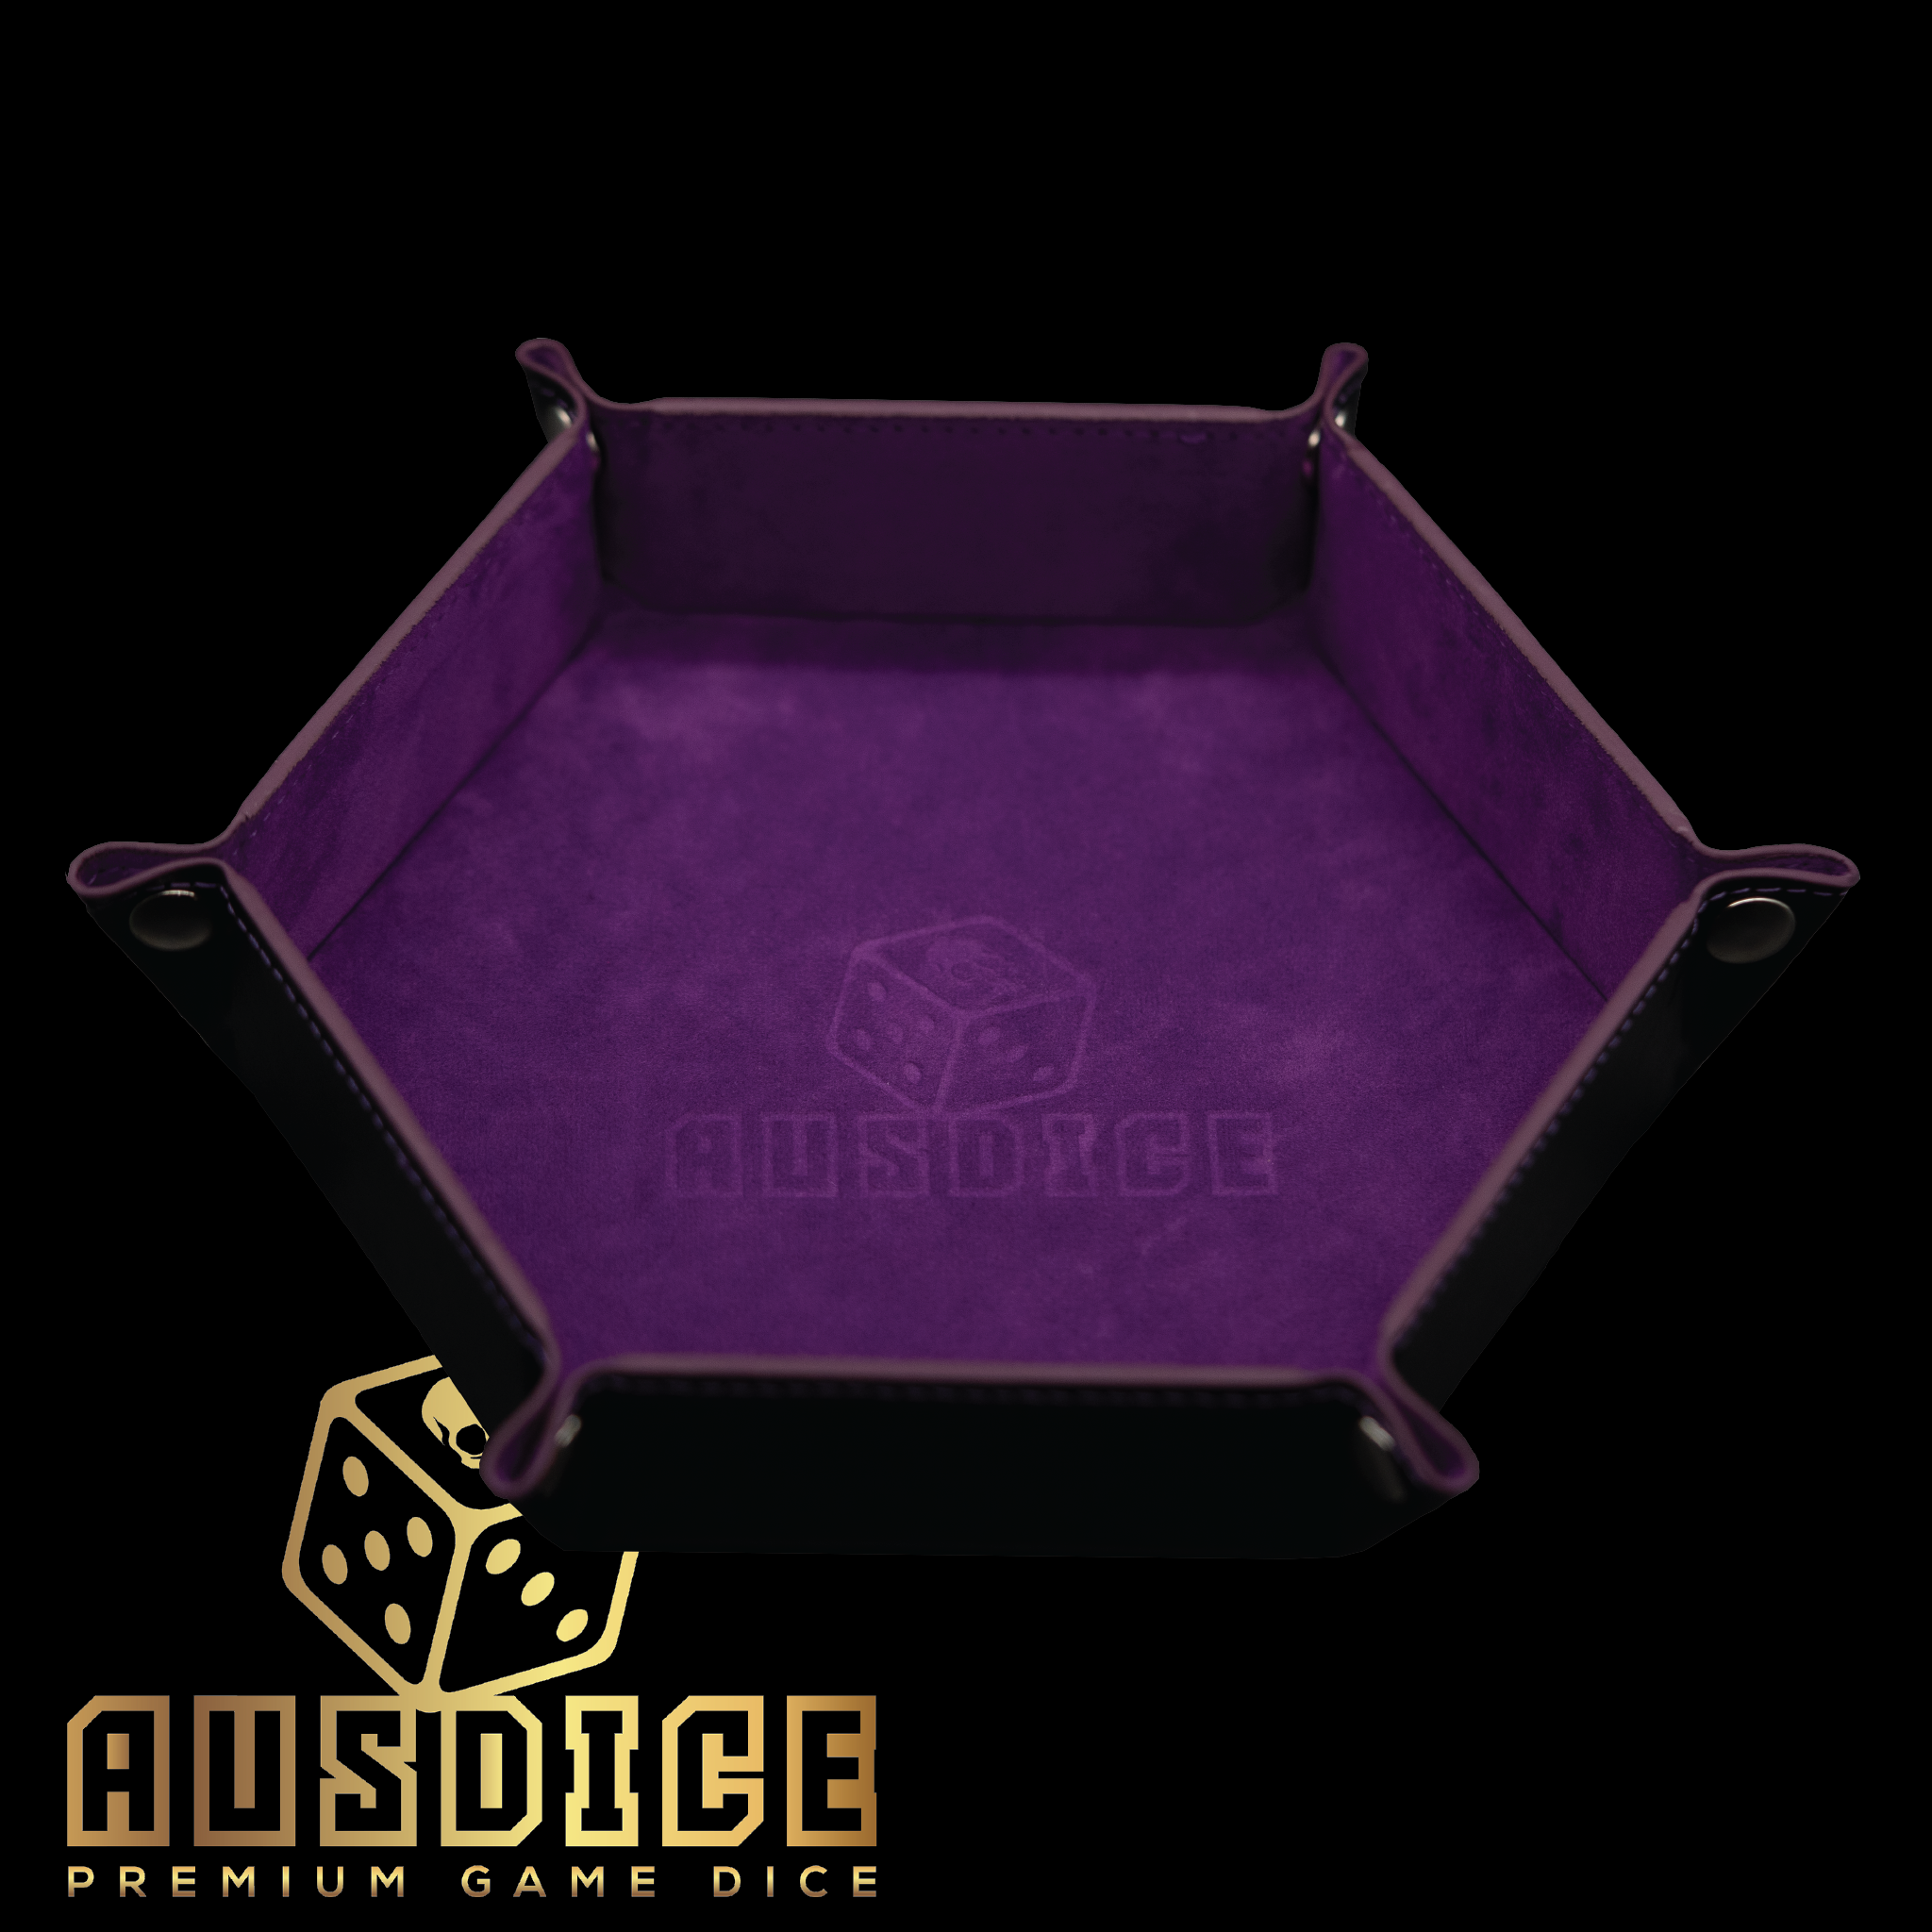 Ausdice Hex Dice Tray - Purple (with debossed logo)